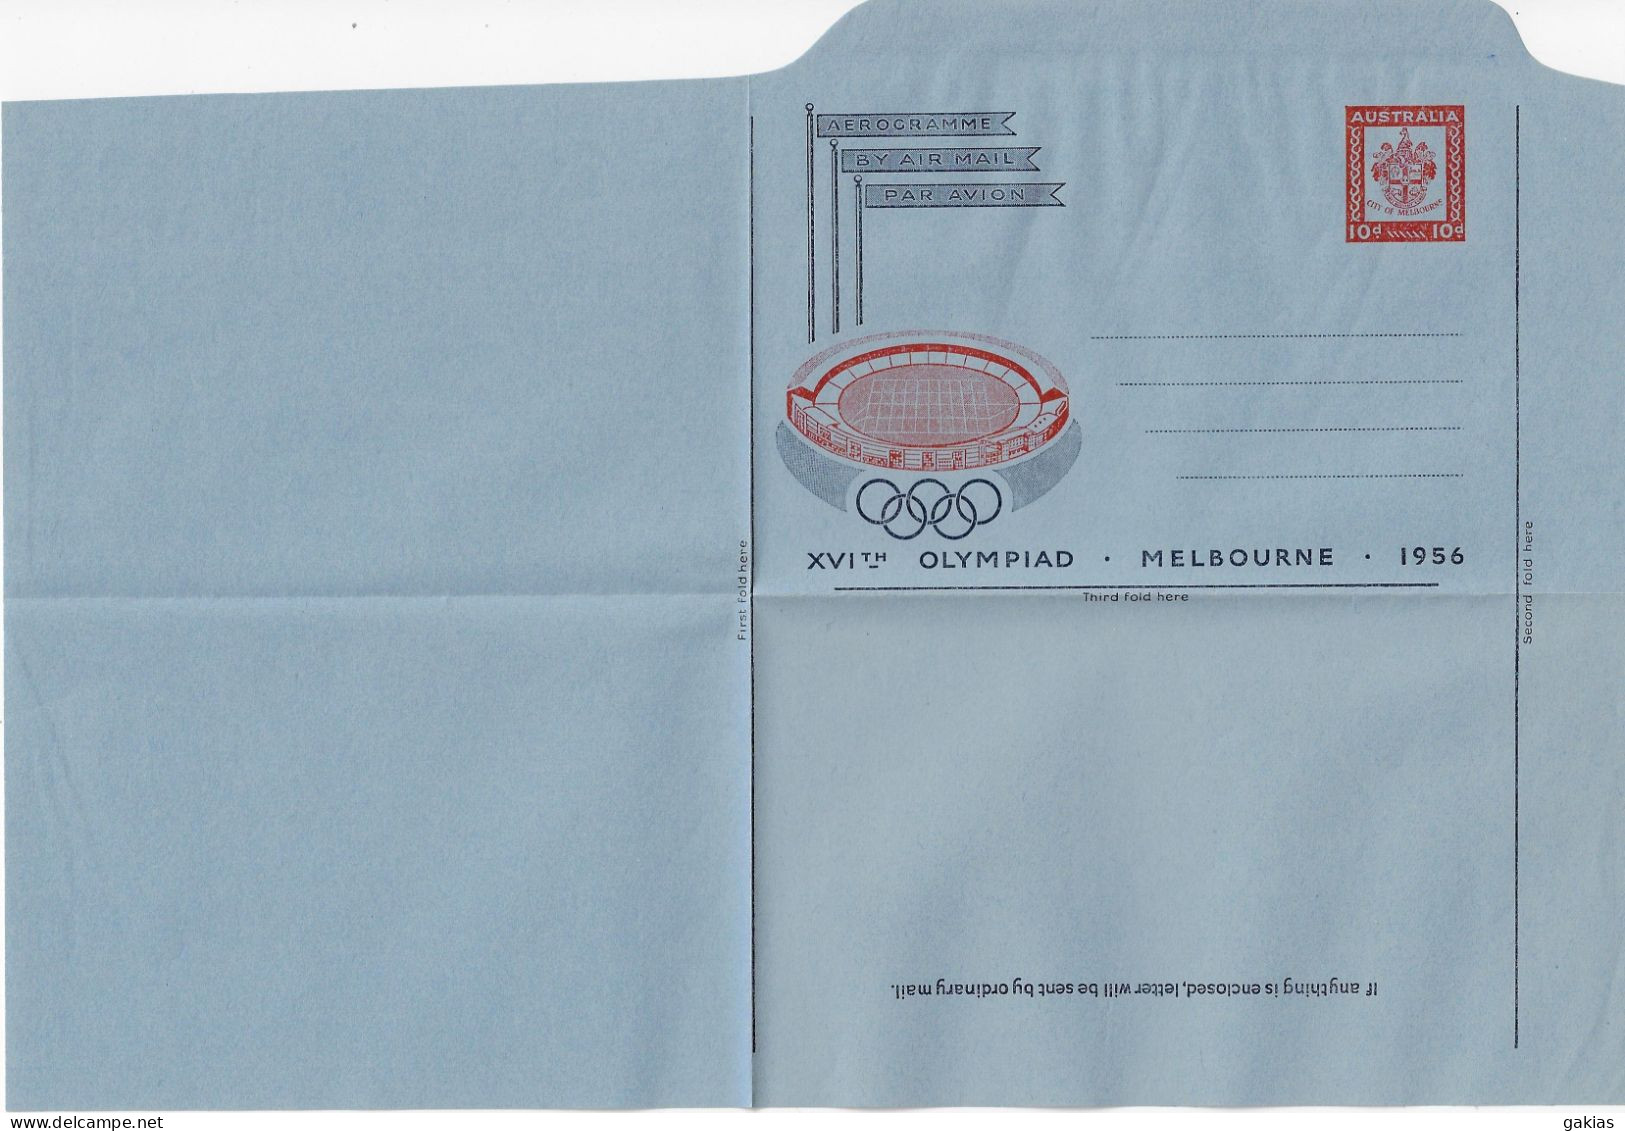 1956 AUSTRALIA MELBOURNE OLYMPICS AEROGRAMME UNUSED. - Covers & Documents